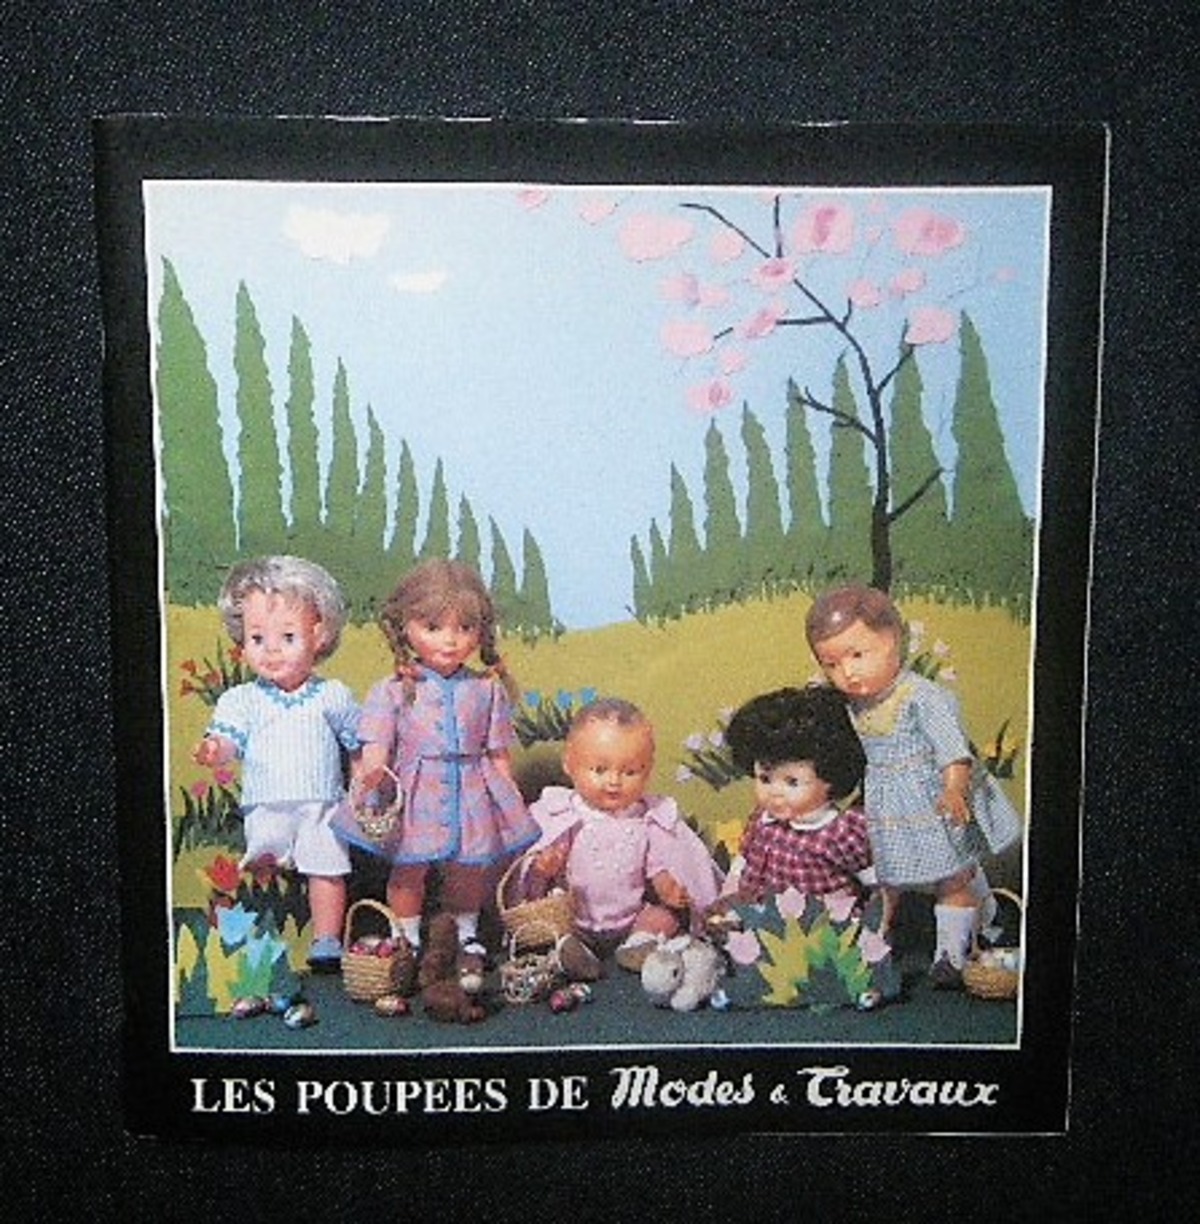 Les poupees de Modes & Travaux マリーフランソワ人形 アンティーク・ドール | ピストルブックス アートブック 洋書  PISTOLBOOKS